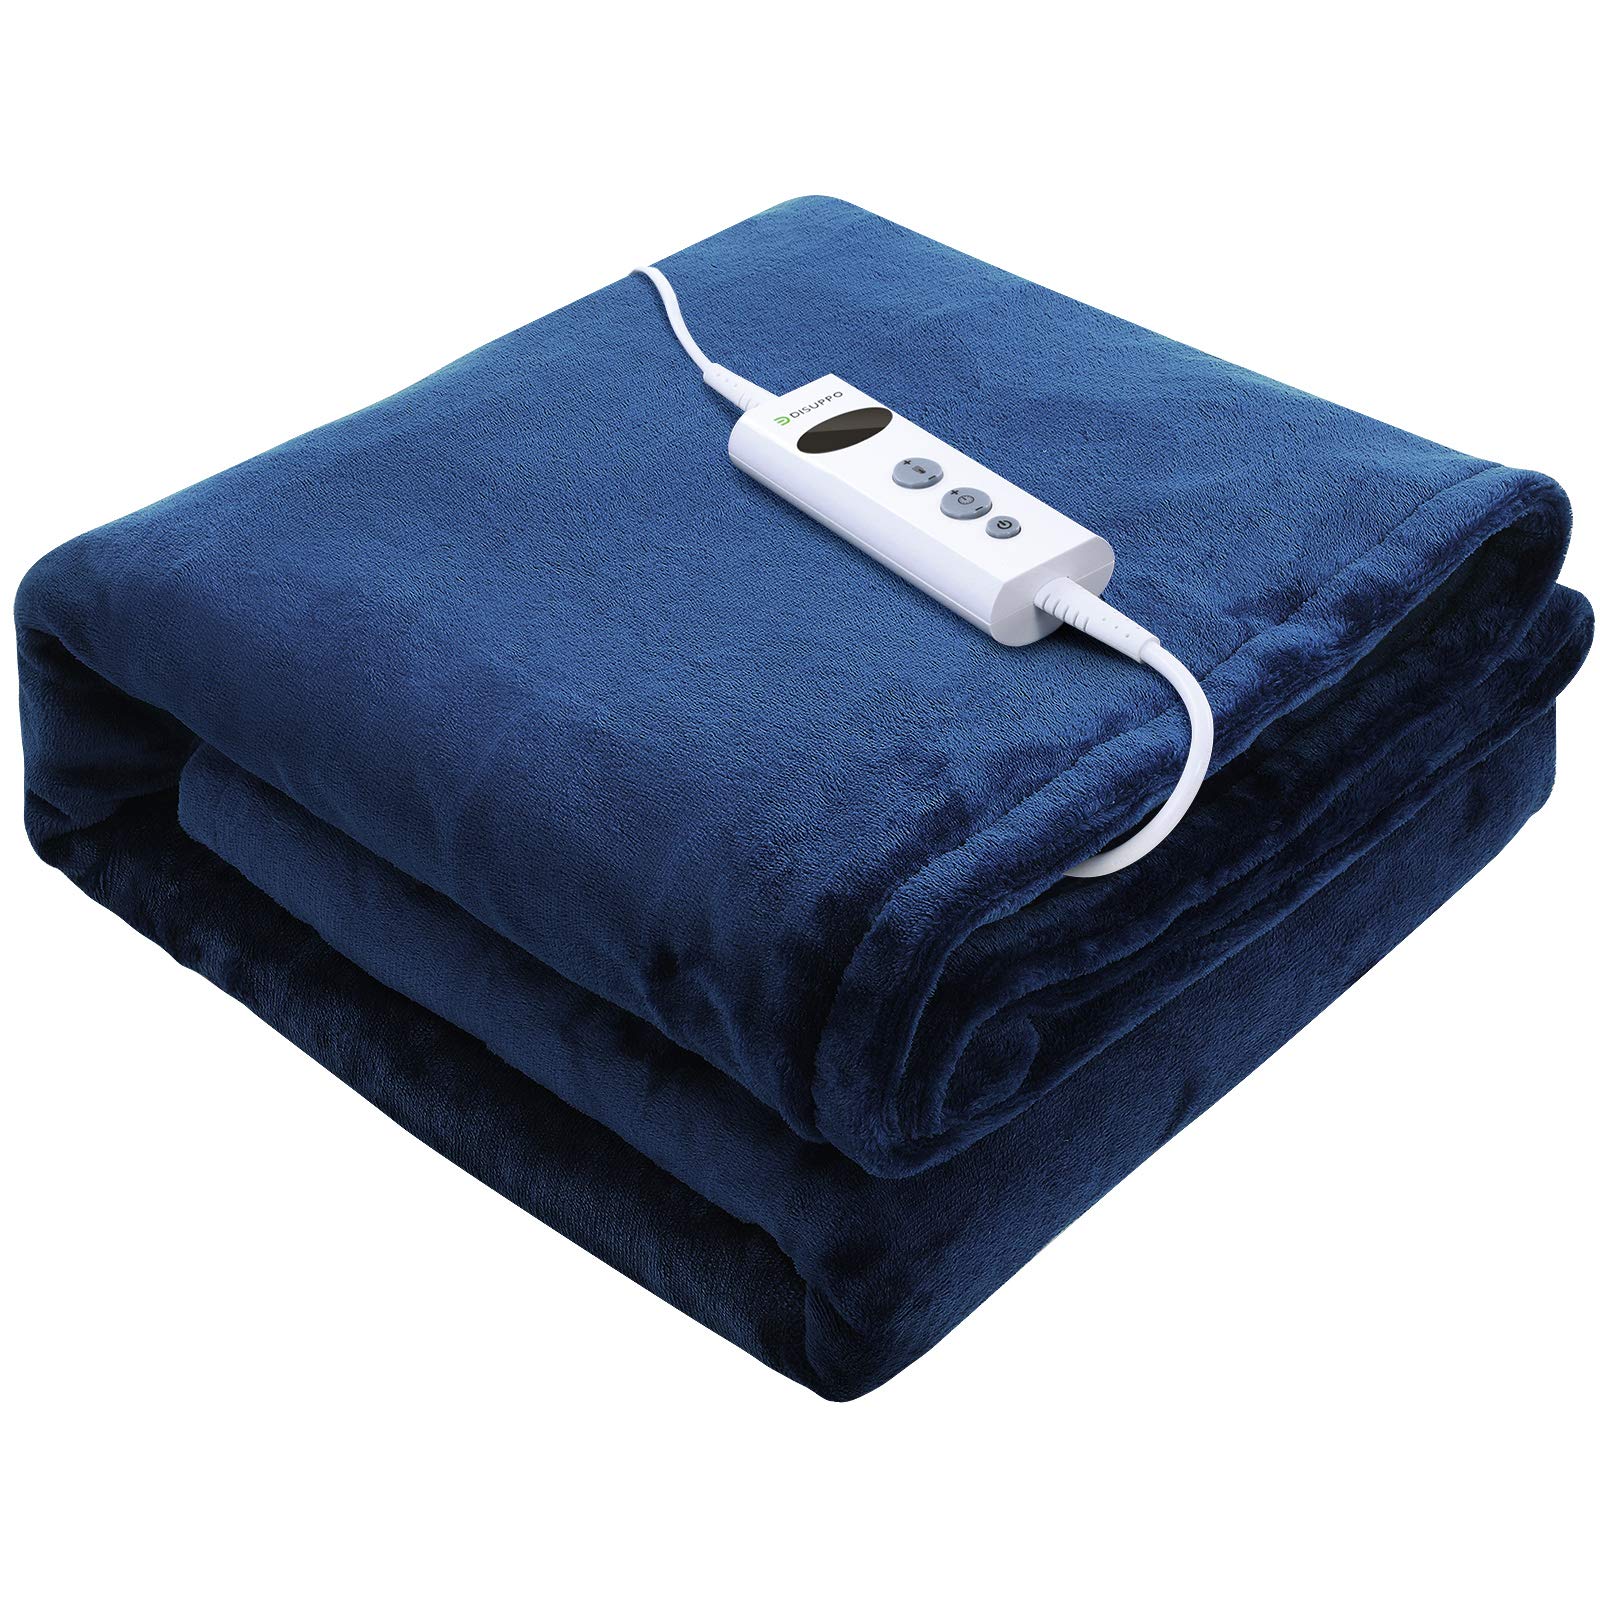 DISUPPO Heated Blanket(NTC) 50 x 60 Inch – Disuppo